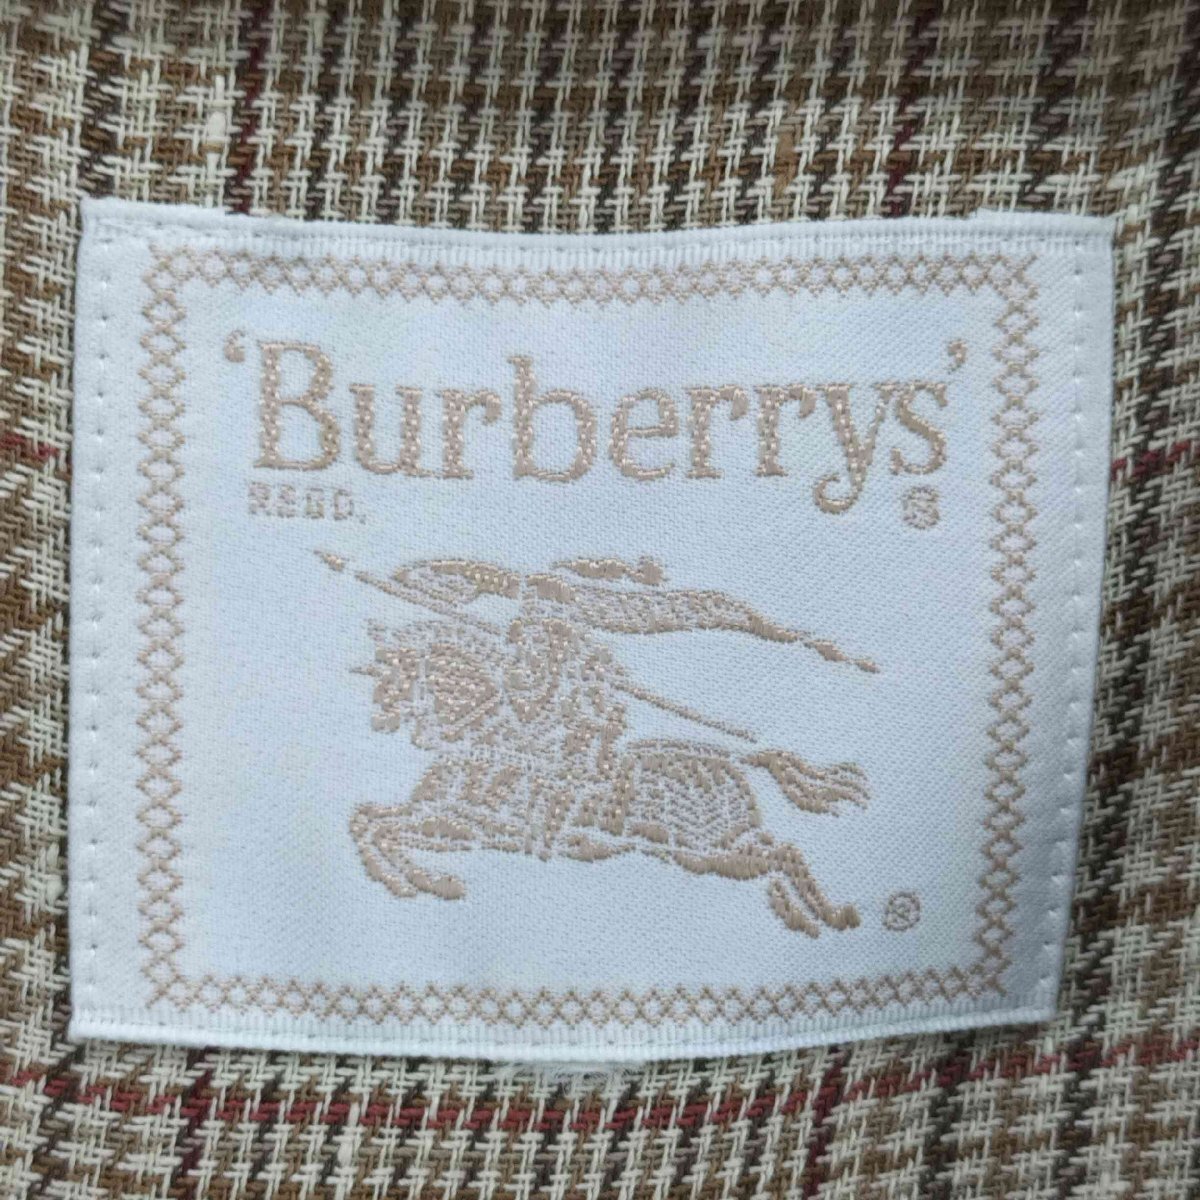 BURBERRYS(バーバリーズ) 90S 2B 千鳥格子柄 テーラードジャケット レディース 表記無 中古 古着 1022_画像6